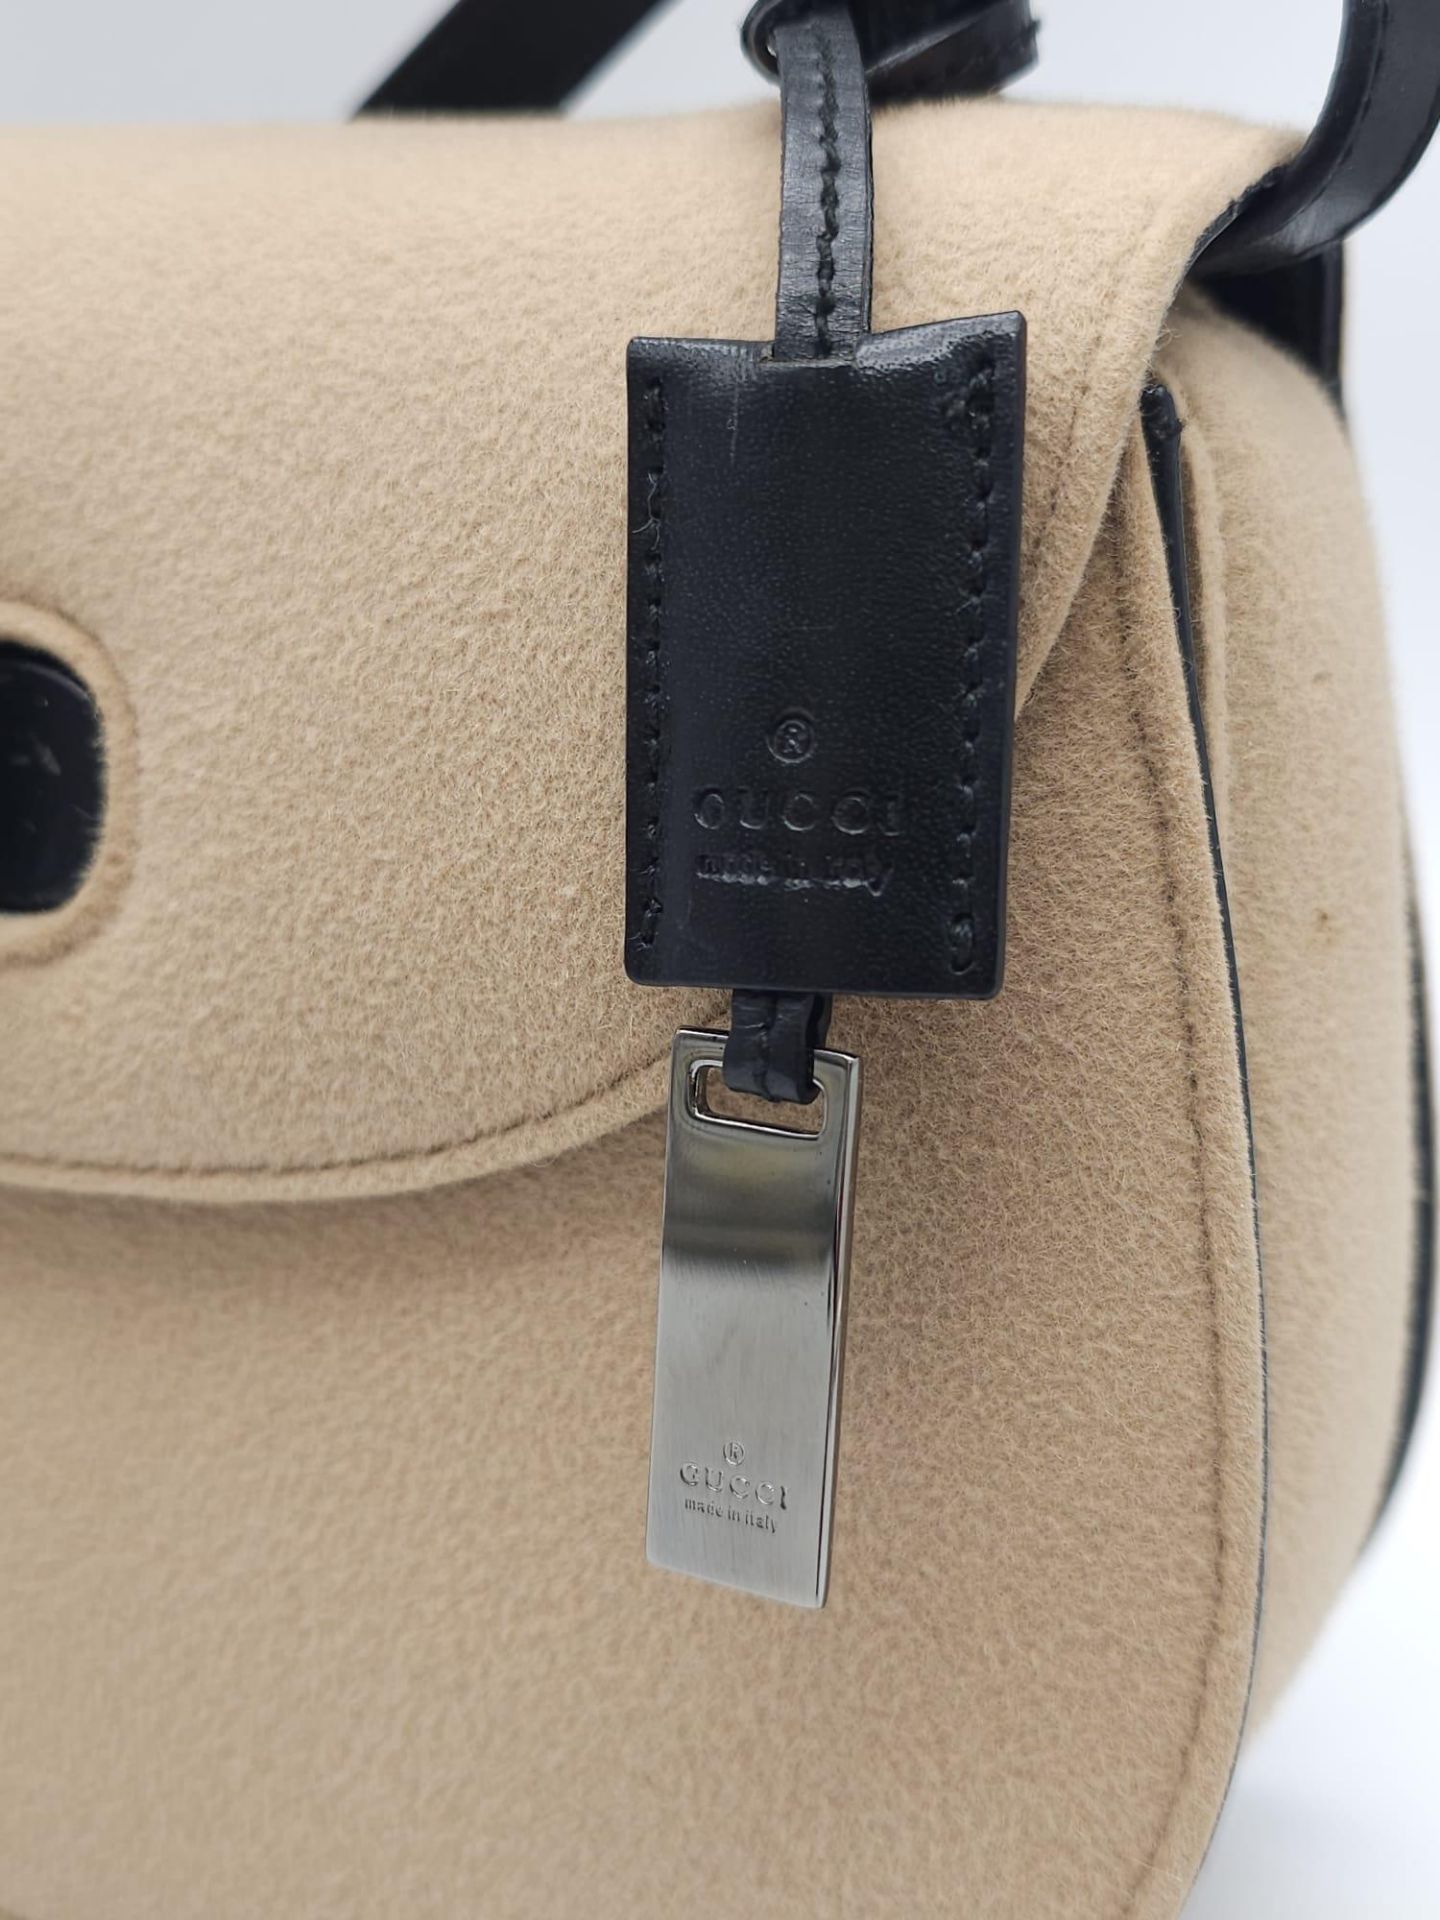 Gucci Tan Wool Purse. This Gucci tan wool purse features a black bar closure, black leather - Image 7 of 15